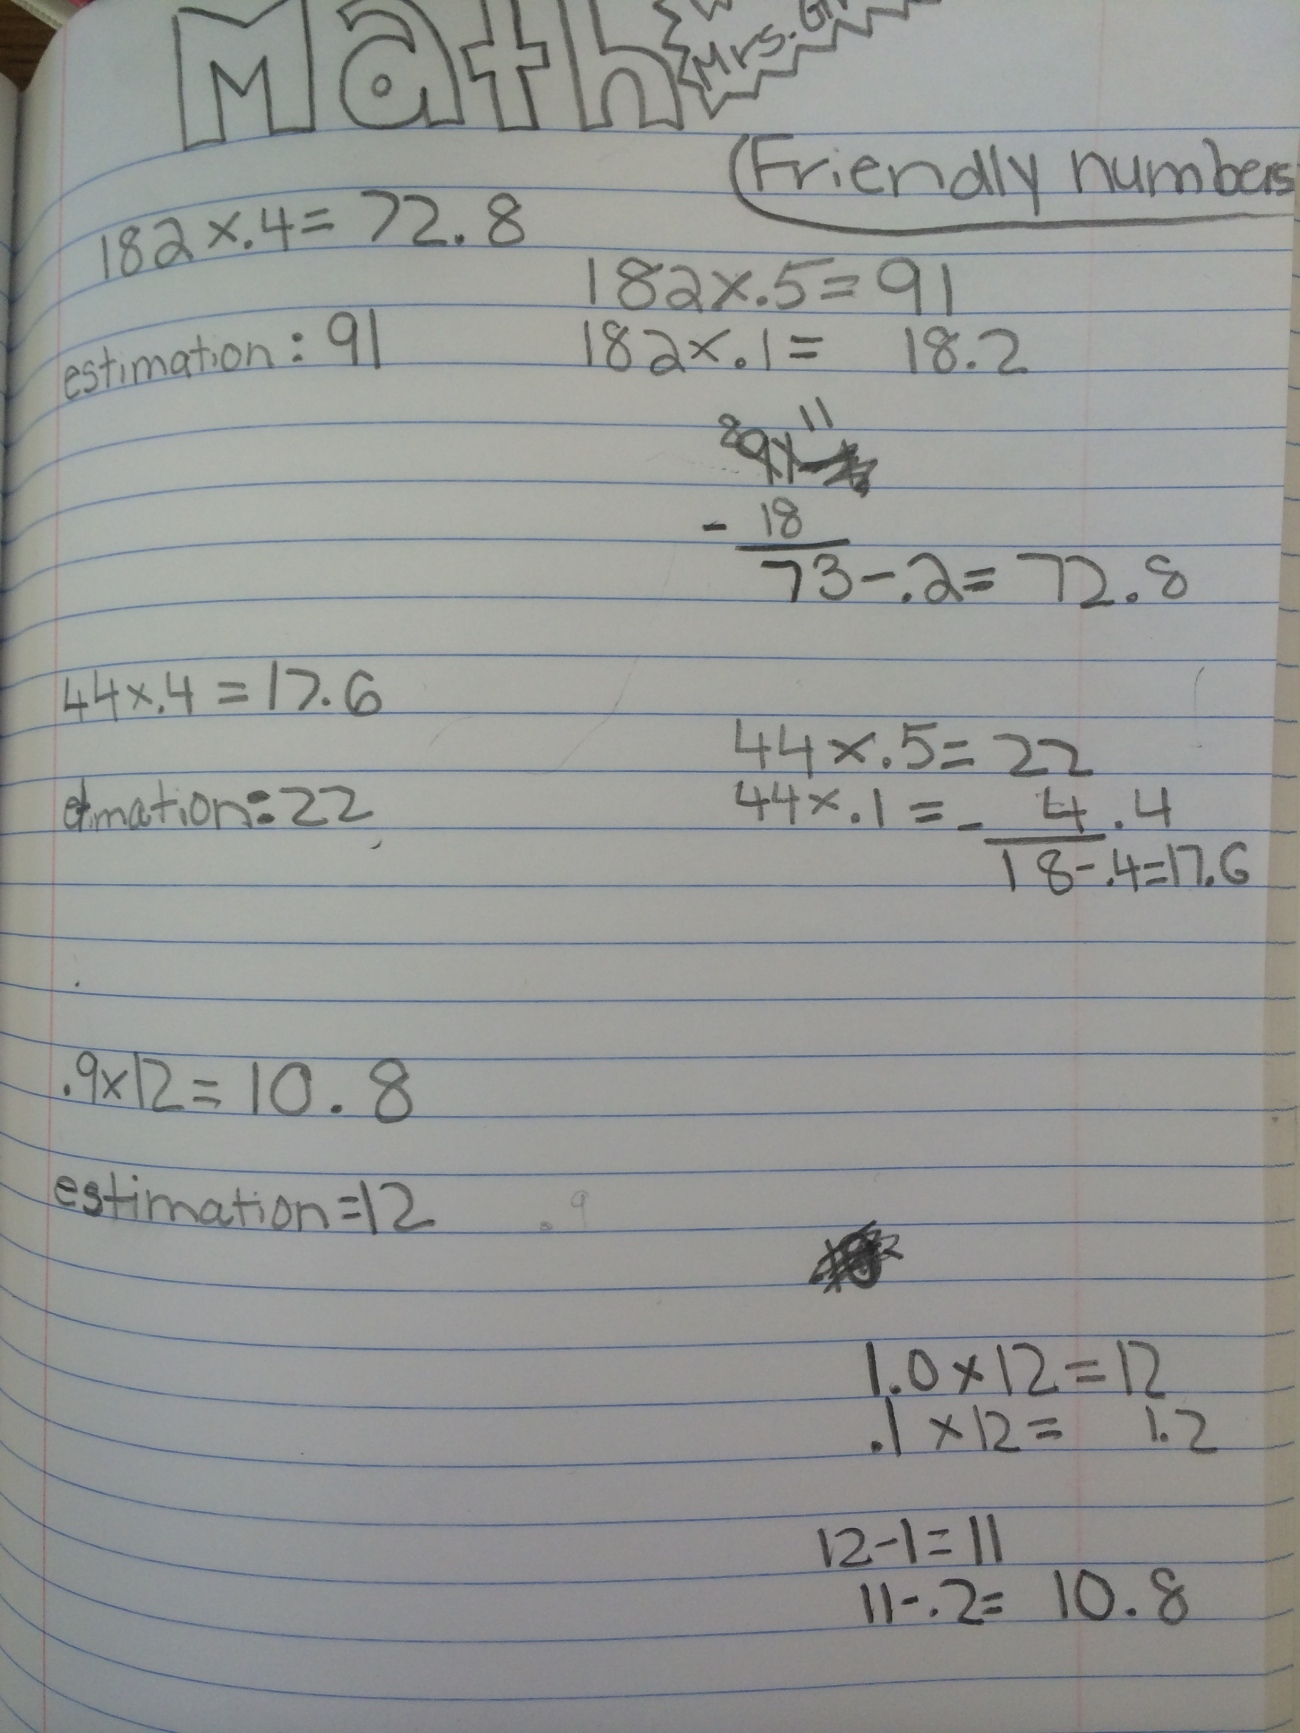 adding-and-subtracting-decimals-worksheets-pdf-4th-grade-thekidsworksheet